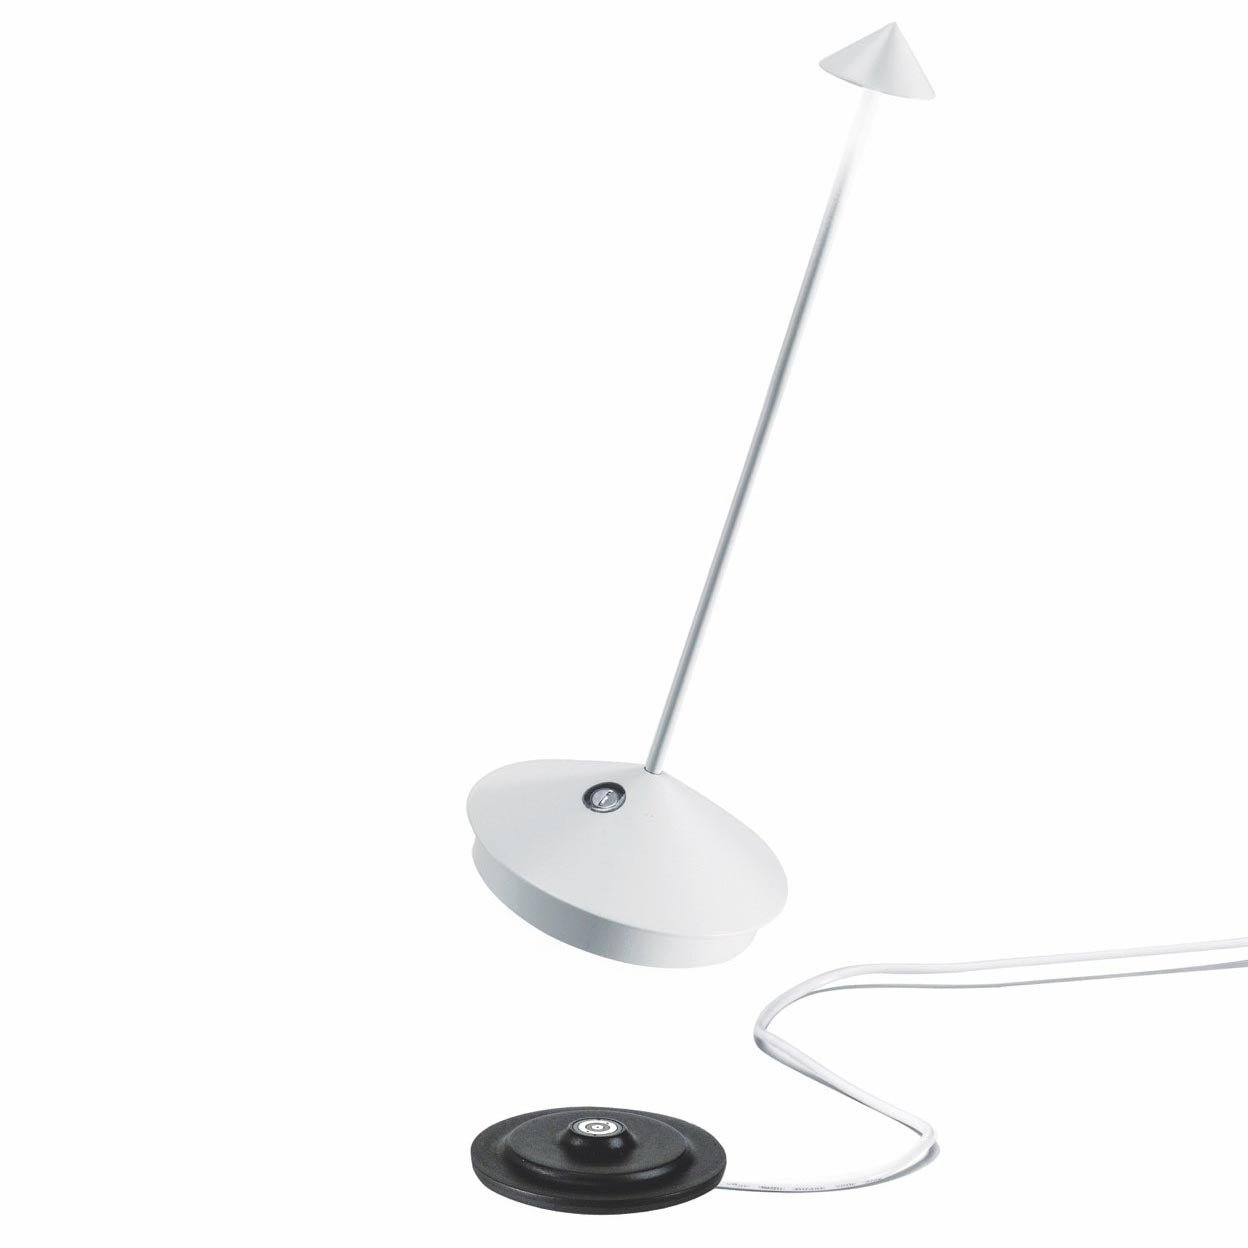 Pina Pro Table Lamp